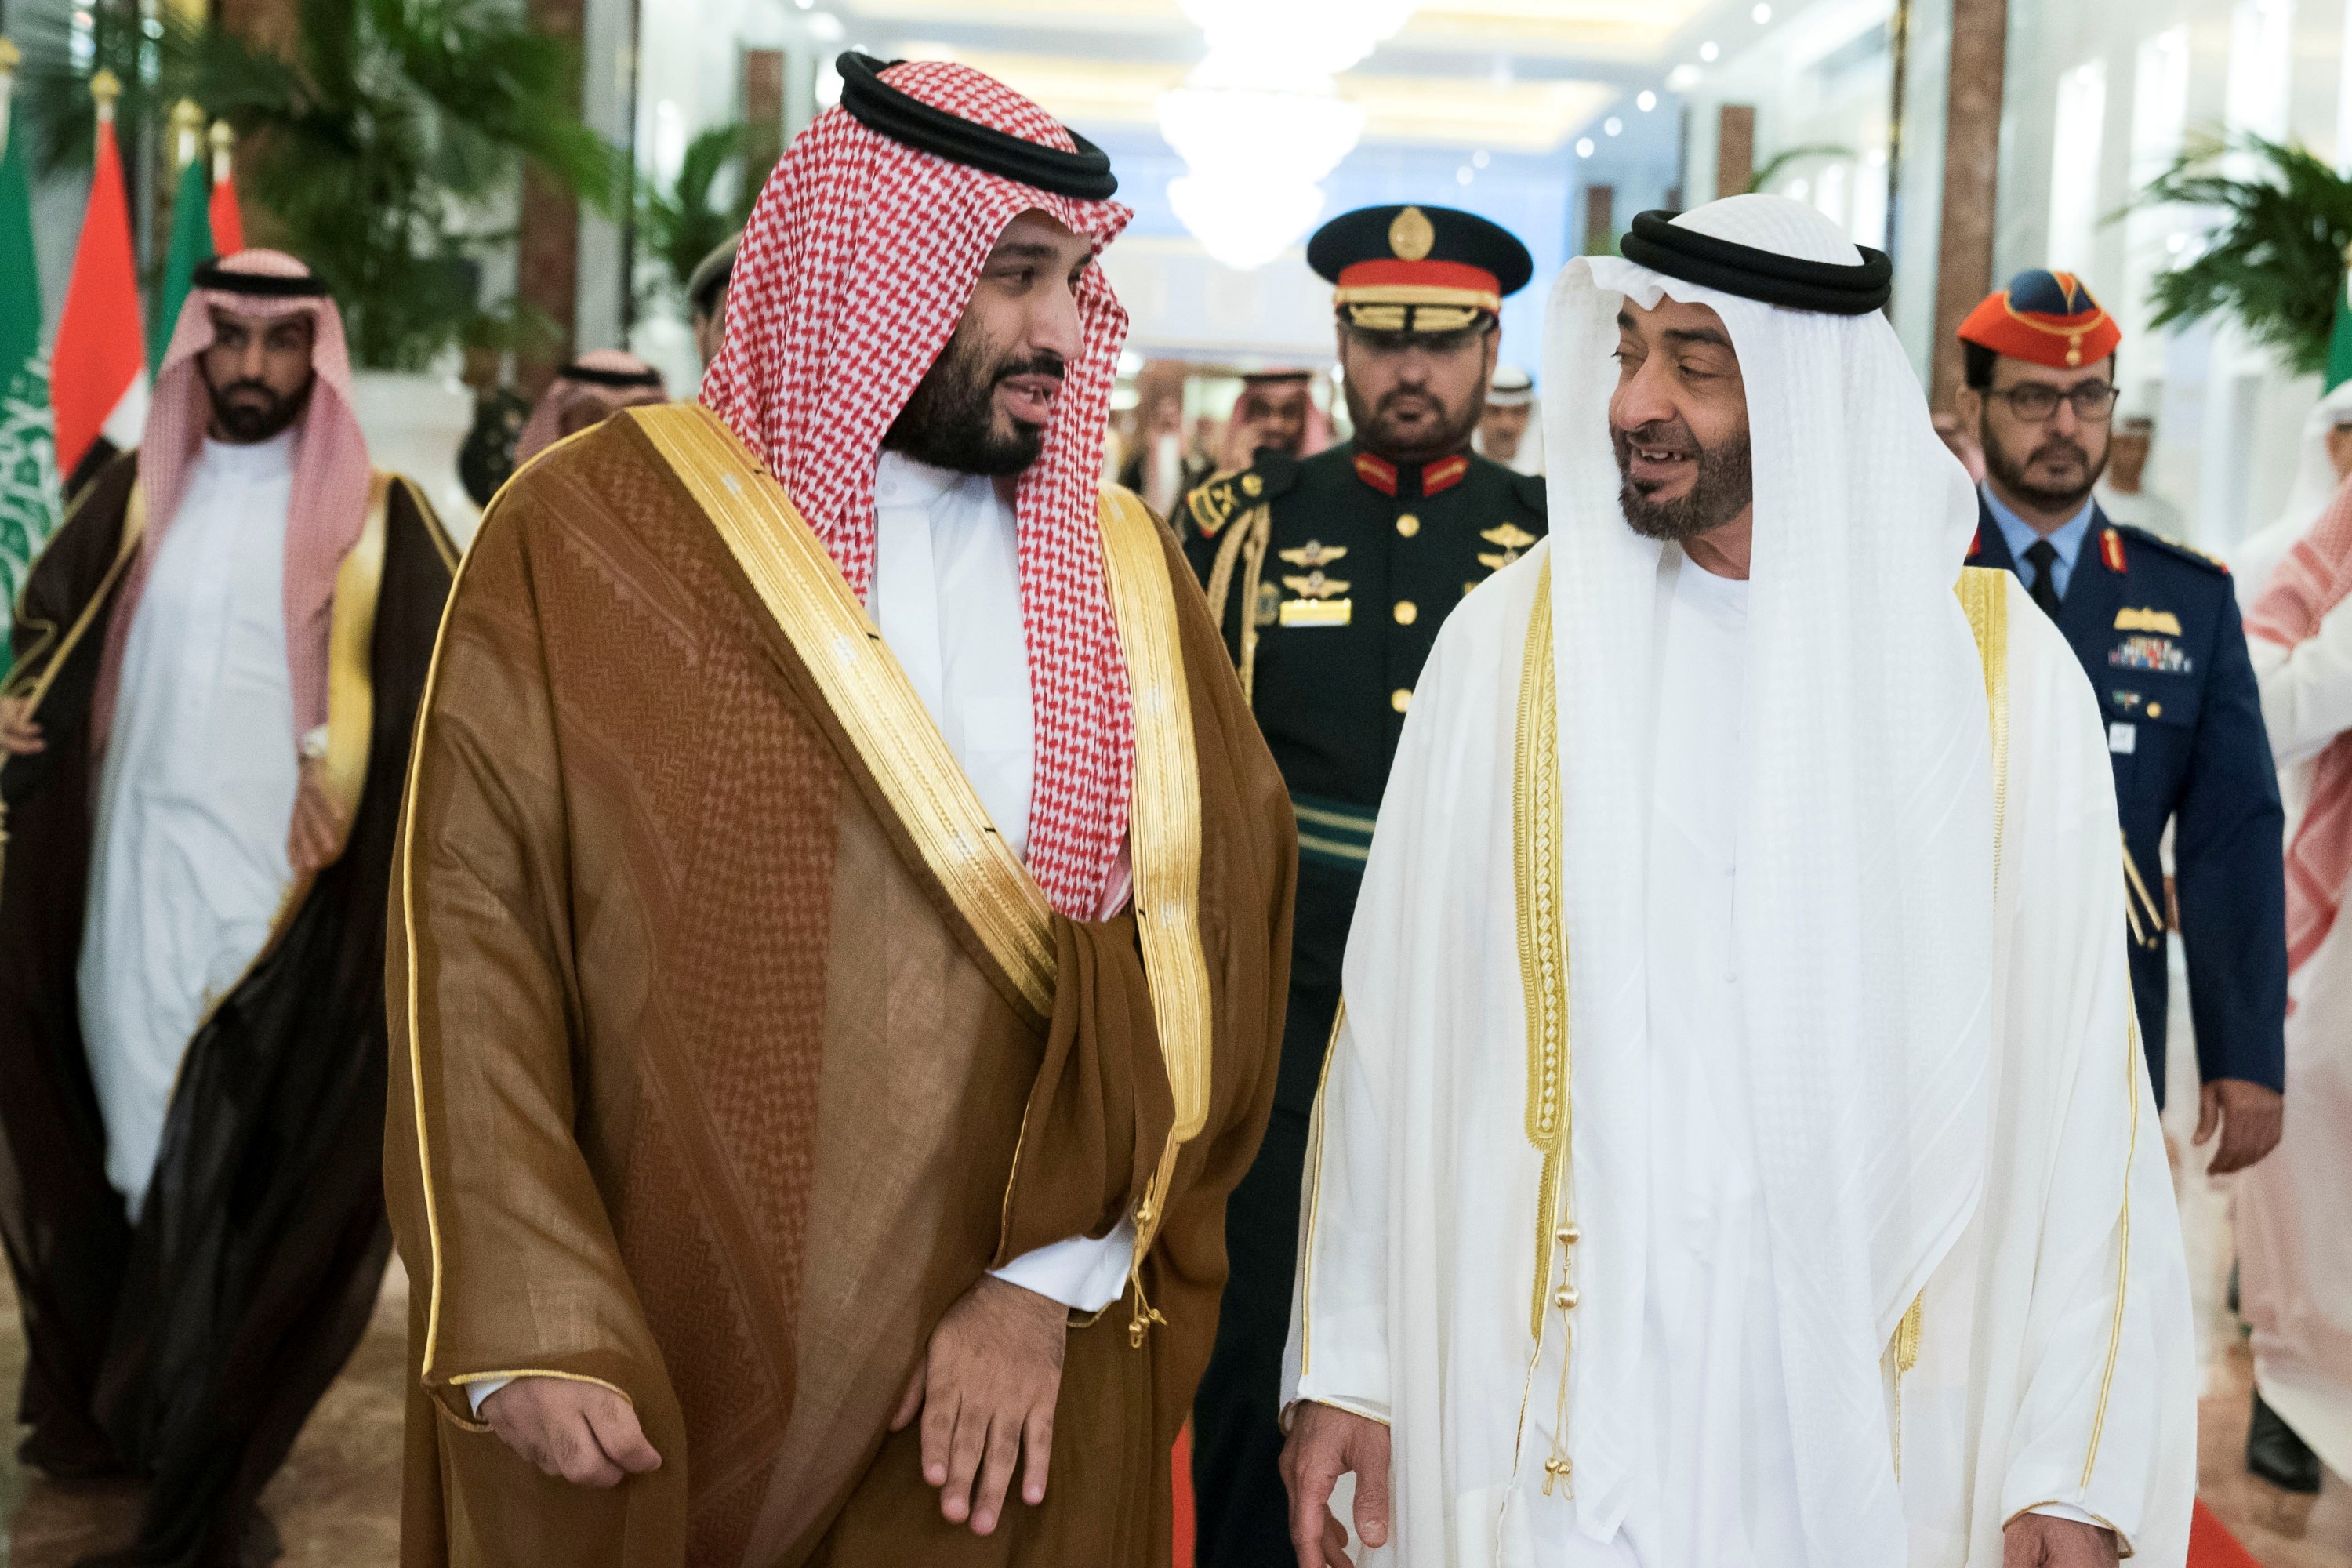 Abu Dhabi's Crown Prince Sheikh Mohammed bin Zayed al-Nahyan receives Saudi Crown Prince Mohammed bin Salman at the Presidential Airport in Abu Dhabi, United Arab Emirates, on Nov. 27, 2019. (Reuters Photo)